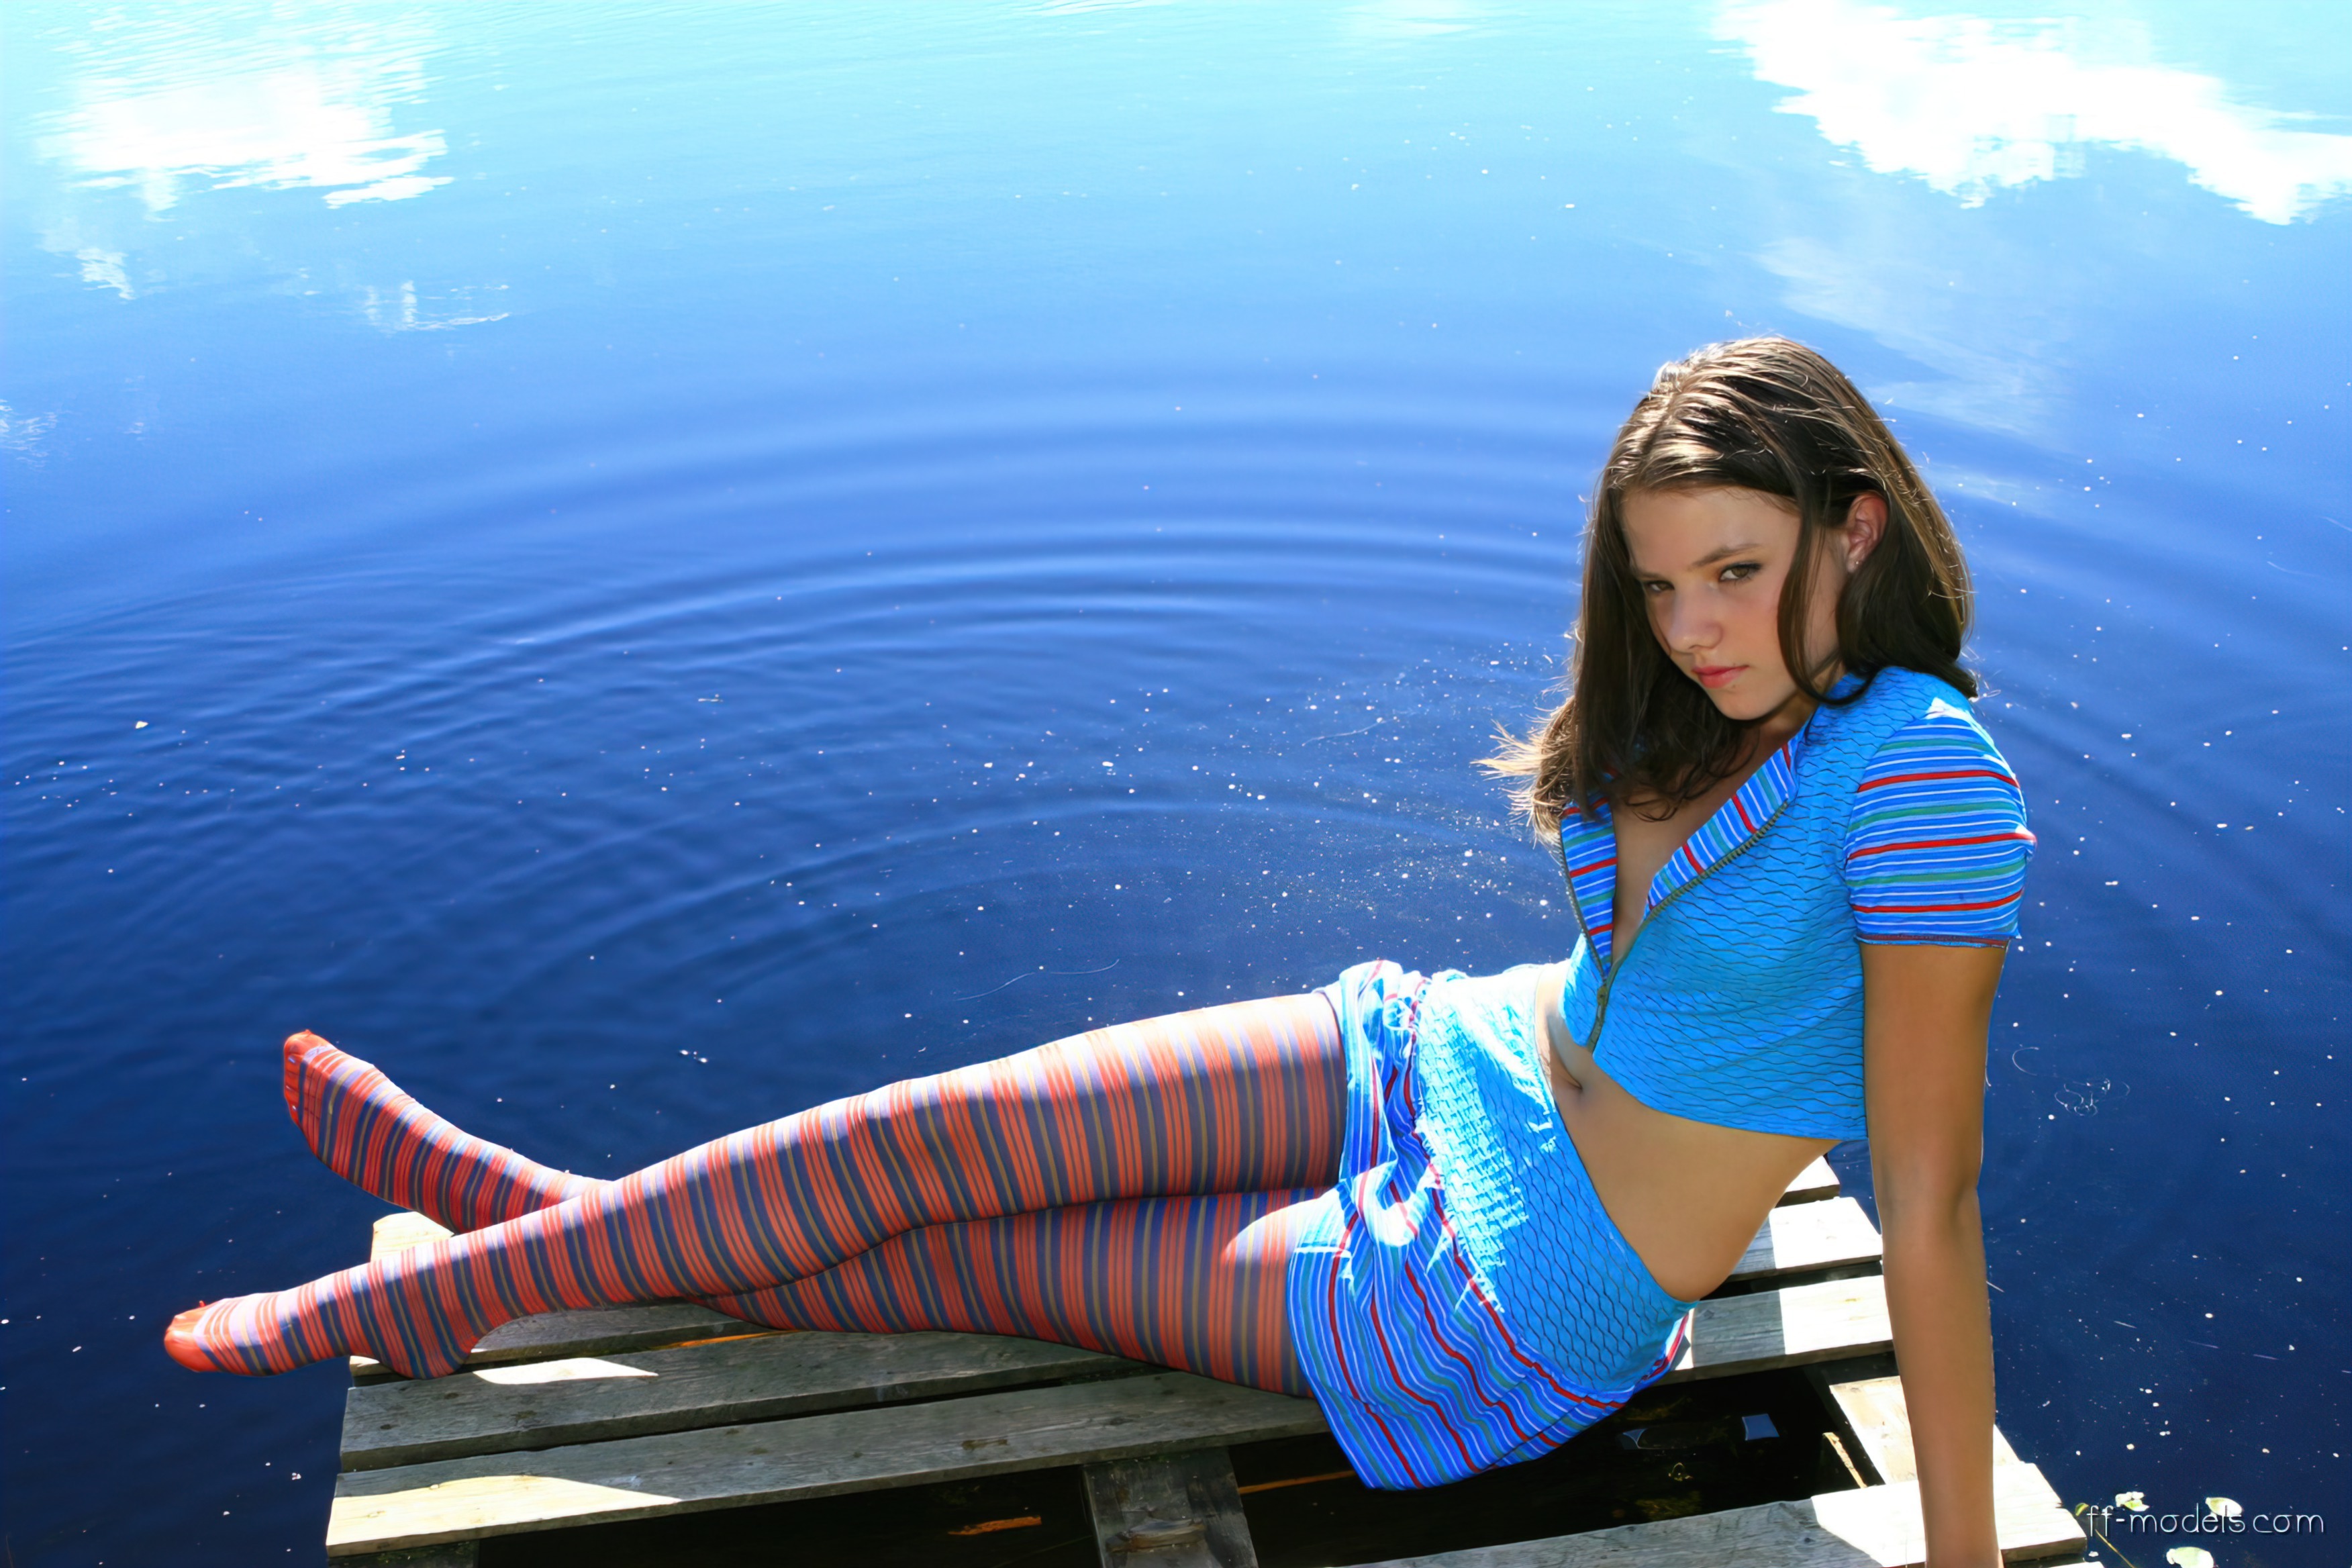 Sandra Orlow Women Model Women Outdoors Bare Midriff Striped Pantyhose Red Pantyhose Lake 9801